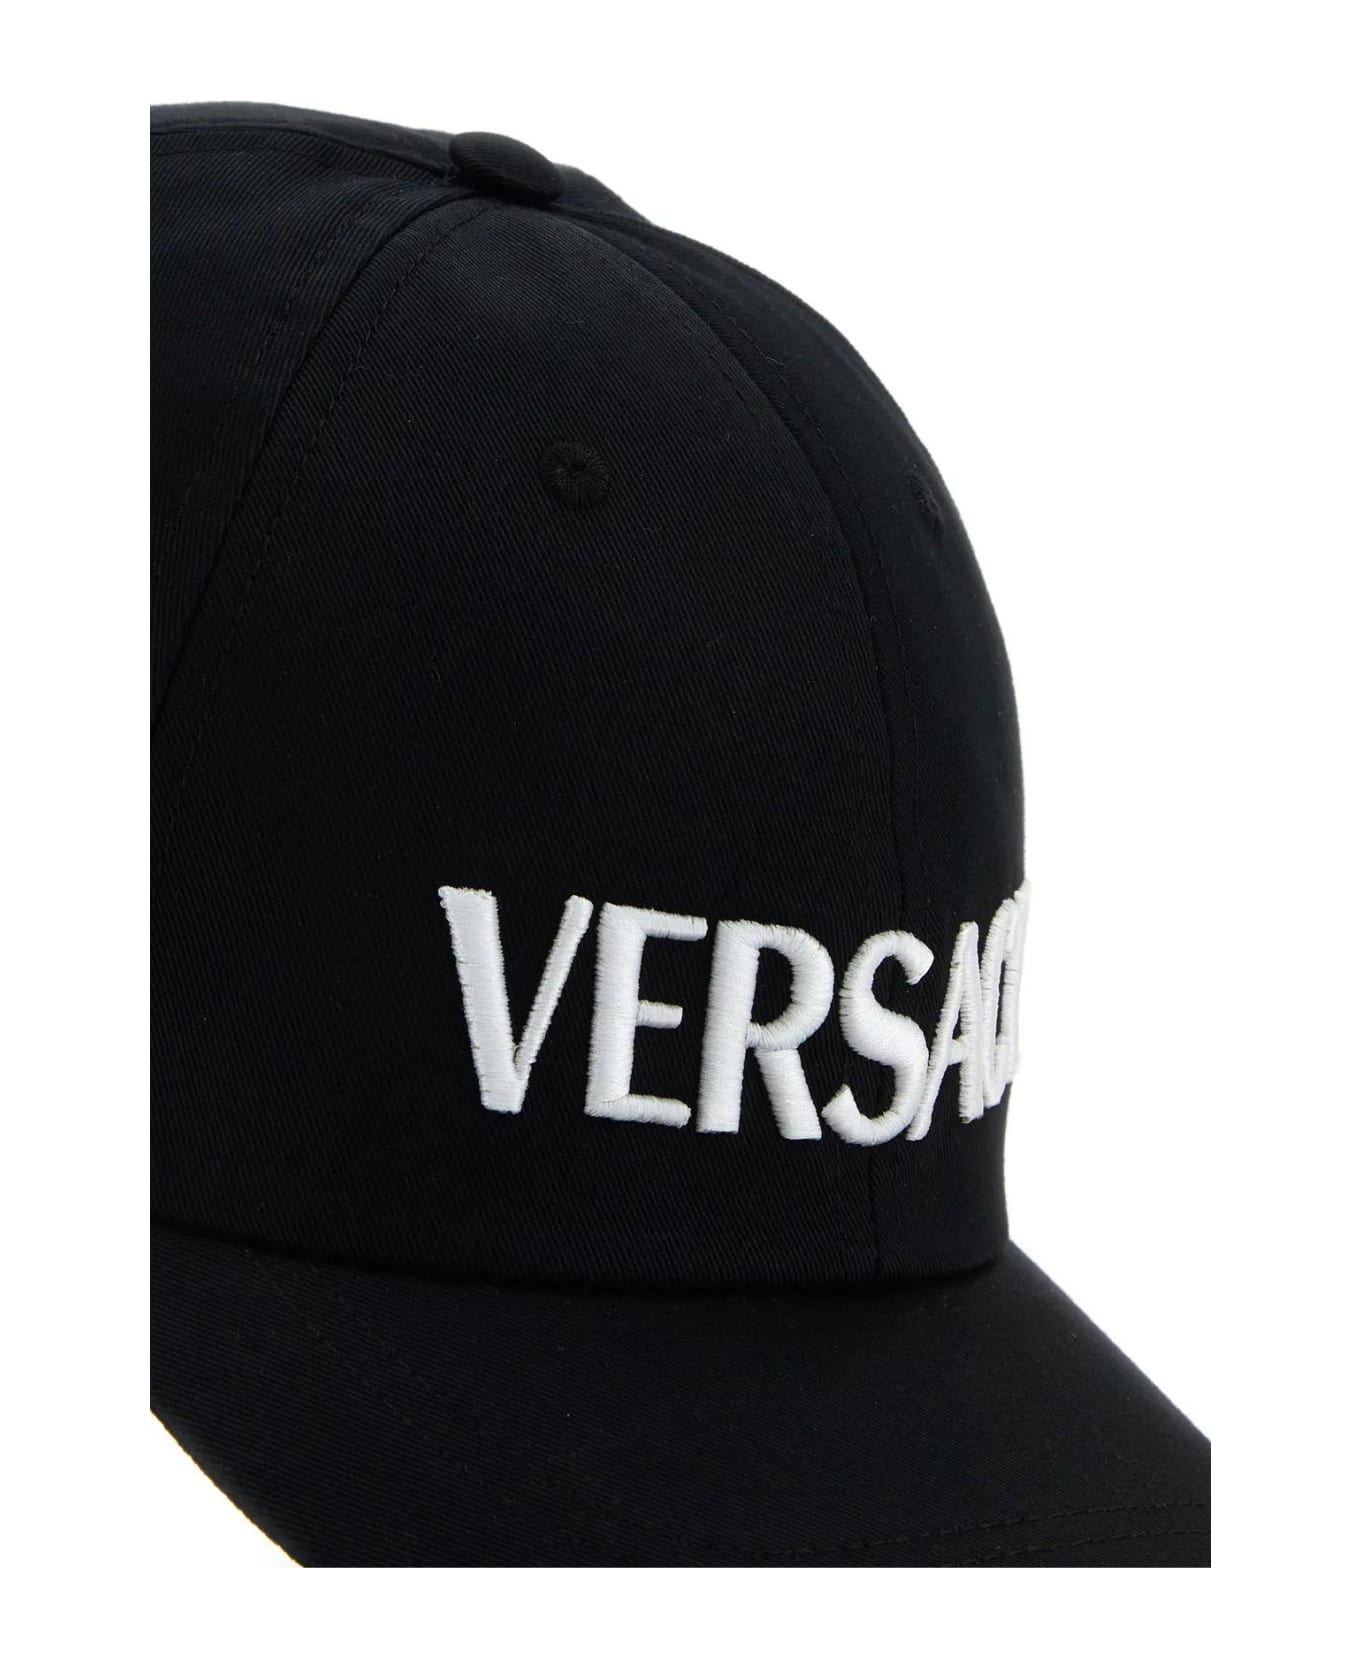 Versace Black Cotton Baseball Cap - 2B02P